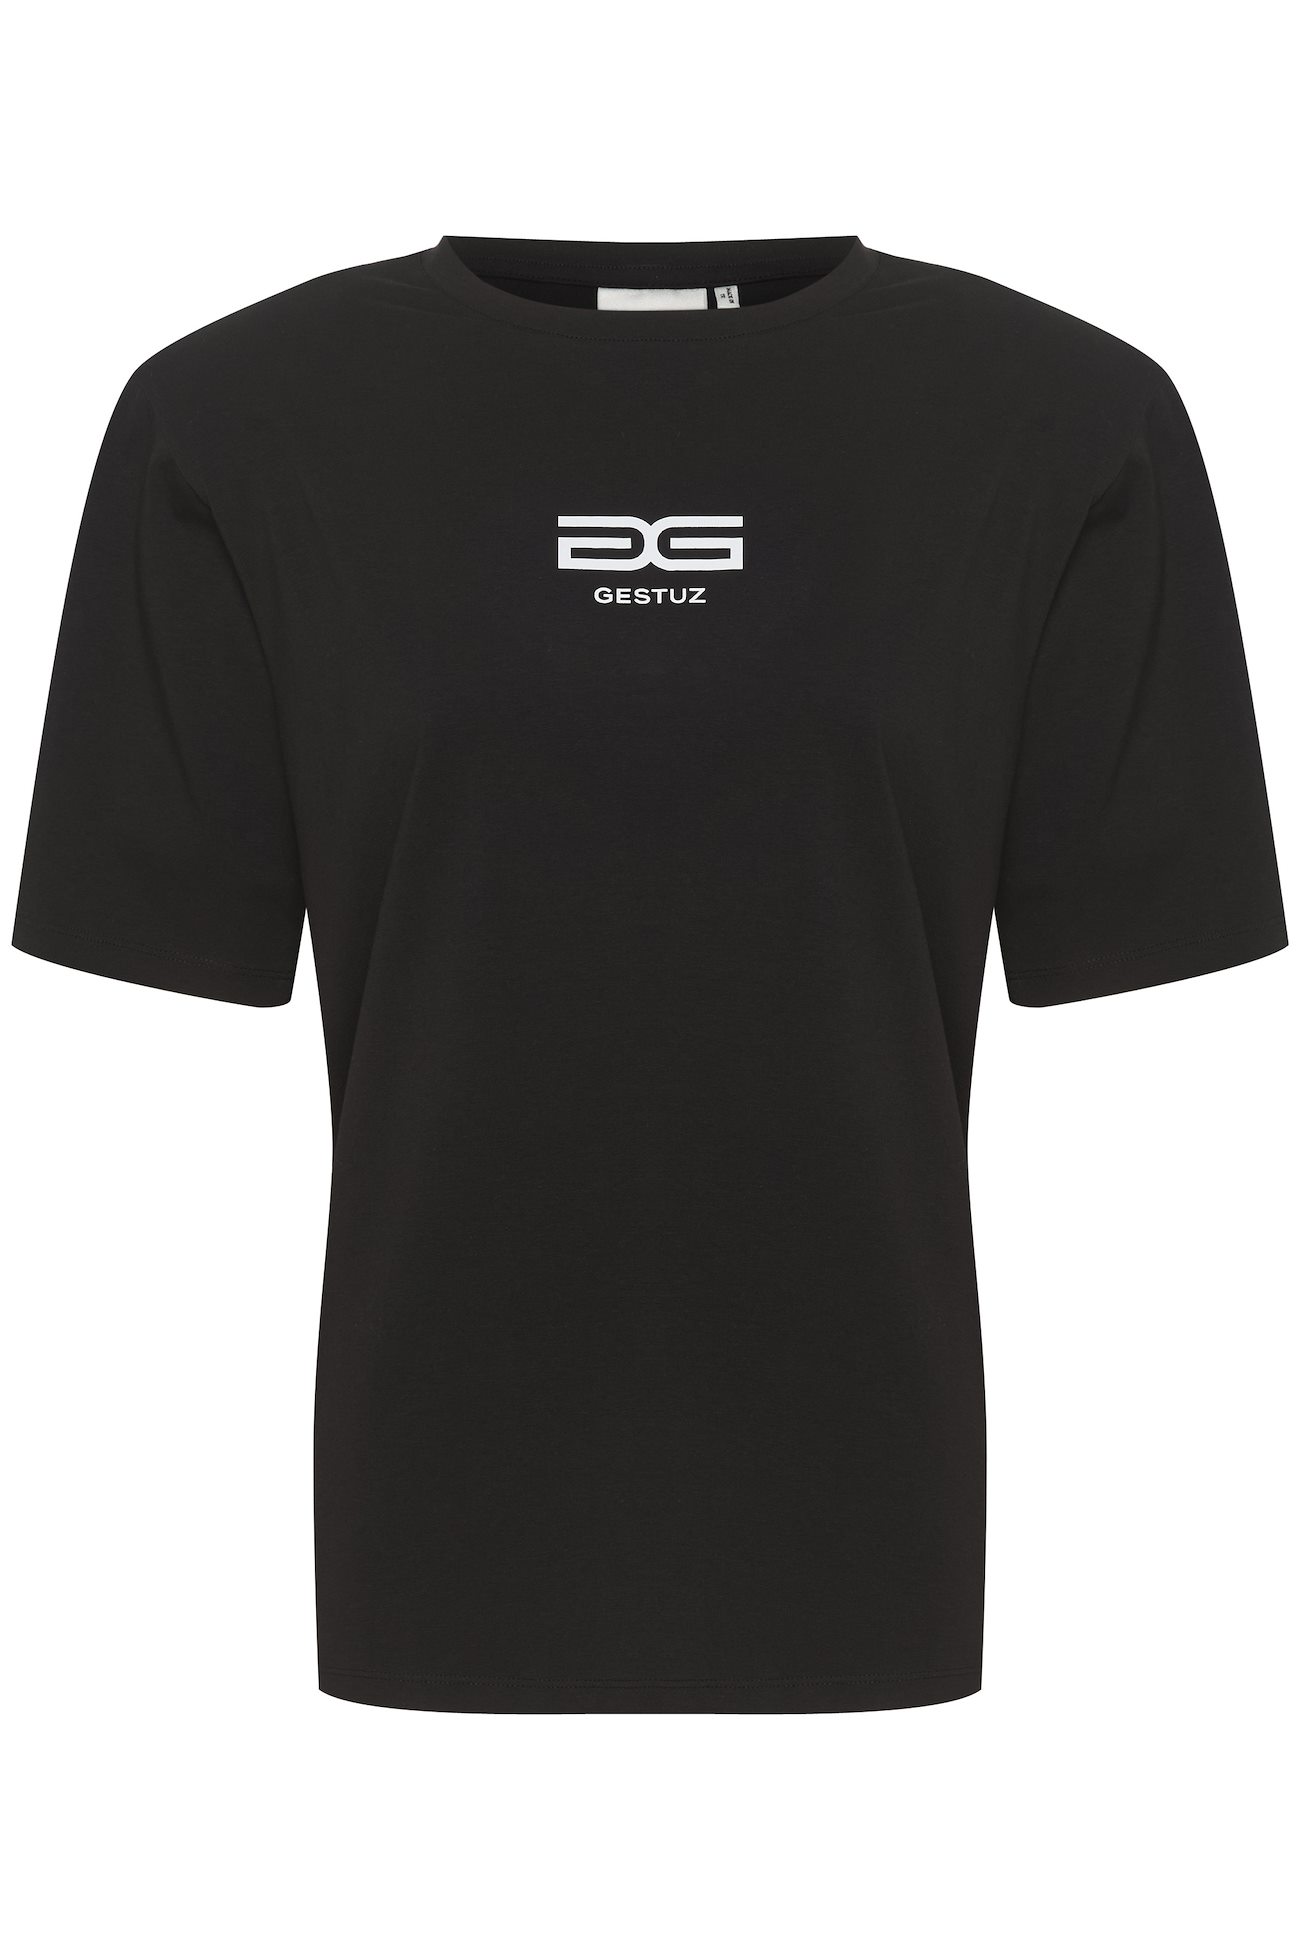 black-samurillygz-t-shirt-1.jpg